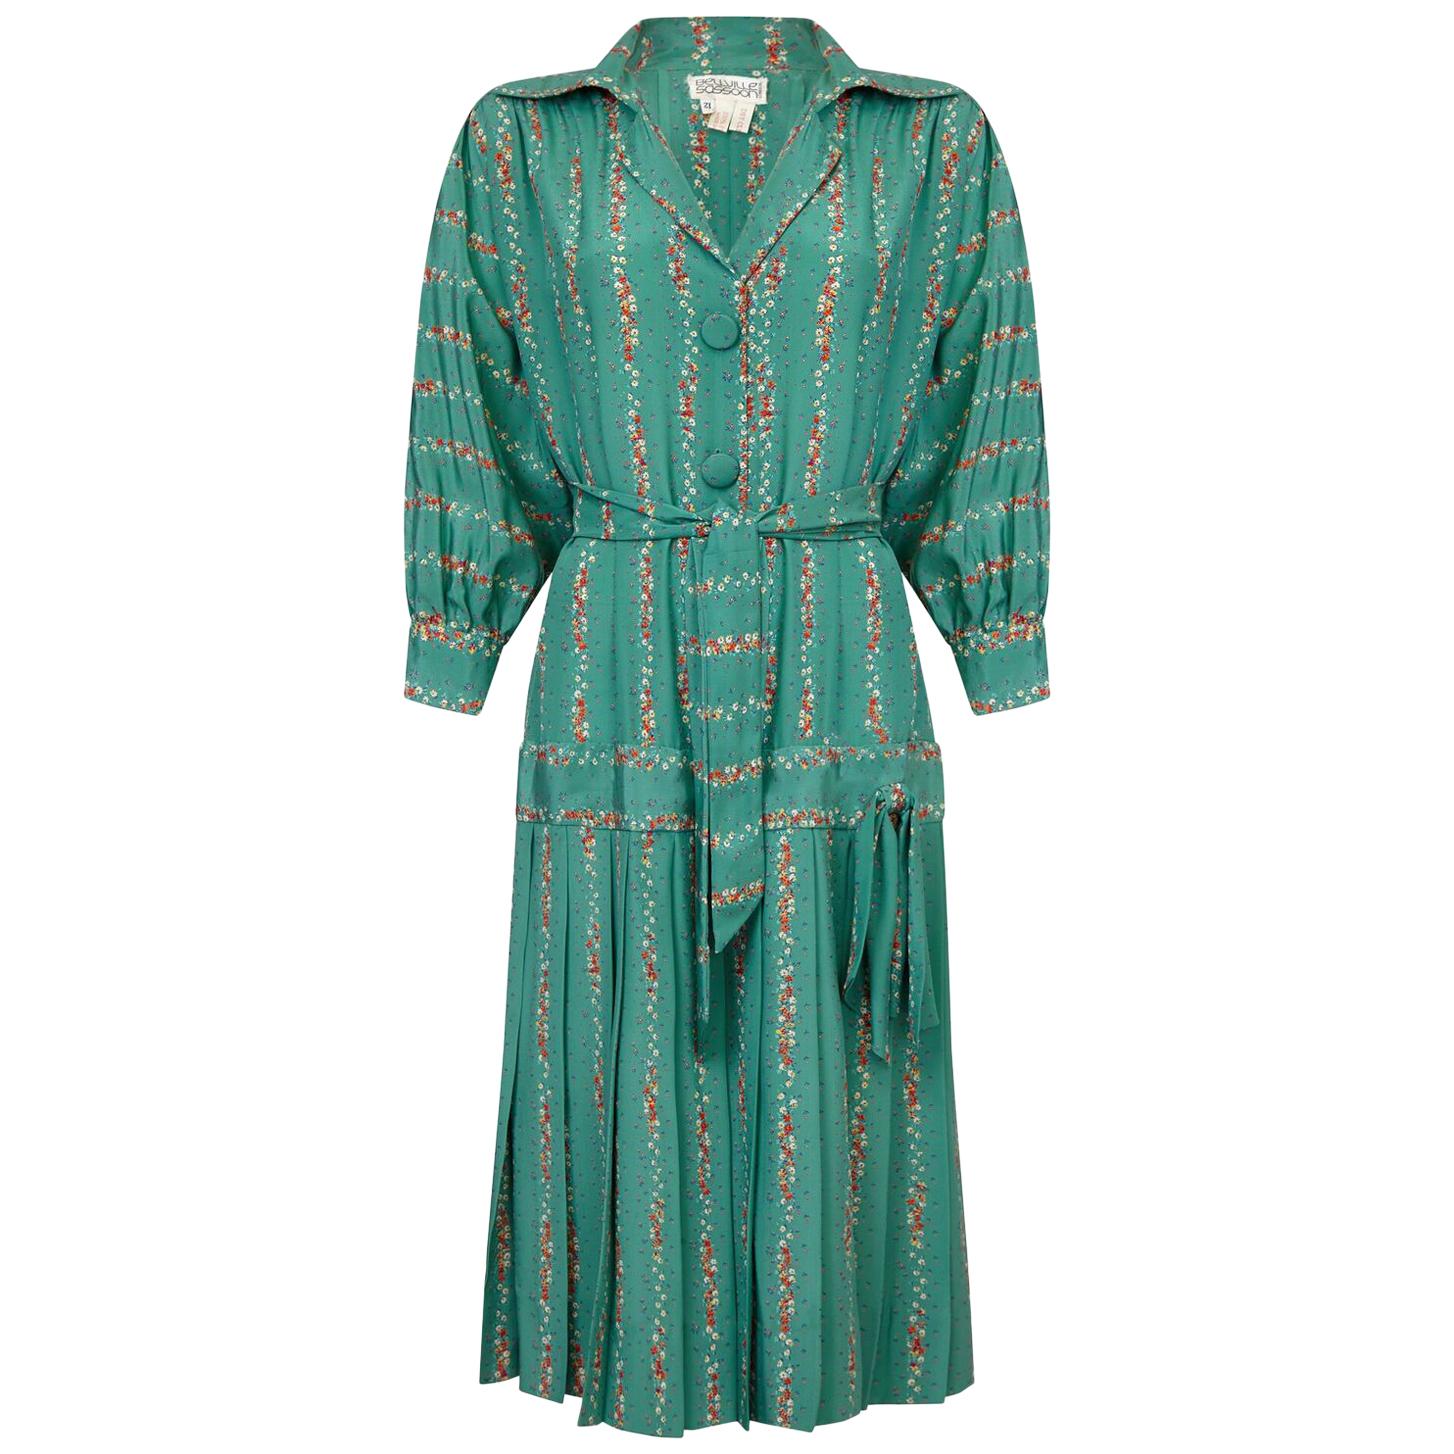 Bellville Sassoon 1970s Silk Flapper Style Floral Dress In Seafoam Green 